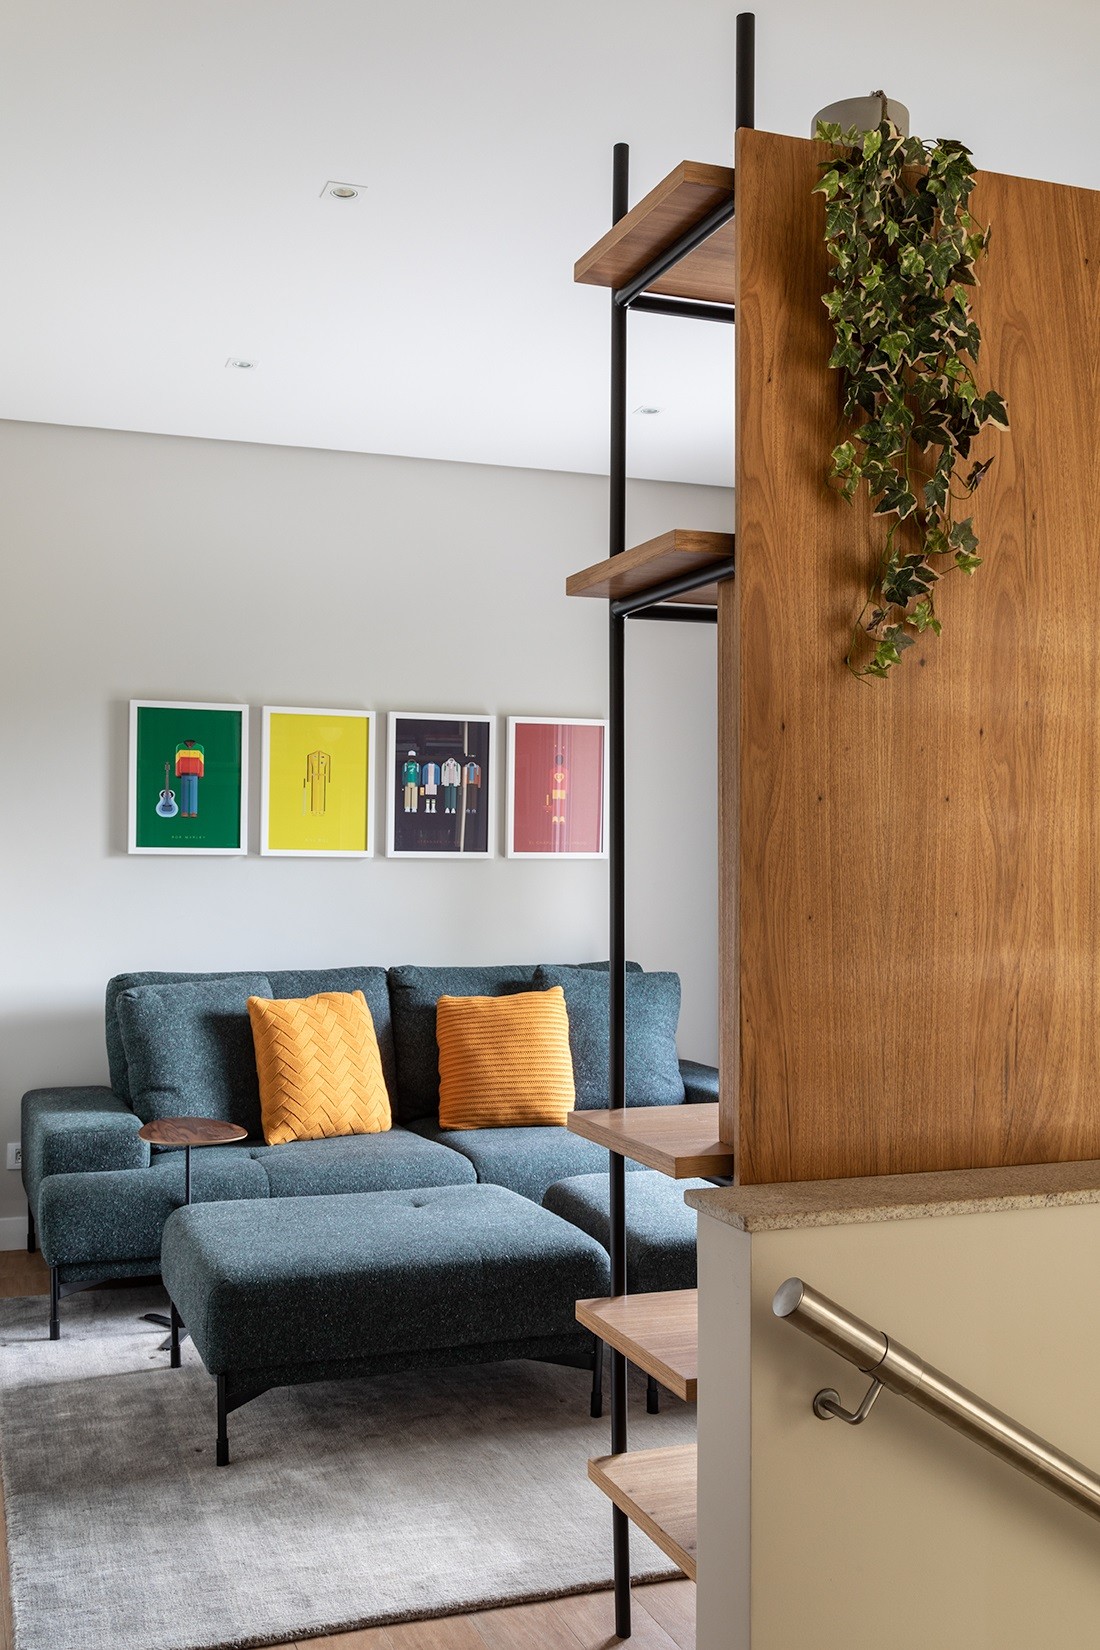 Casa de 235 m² tem área externa arborizada e décor leve (Foto: Evelyn Muller)